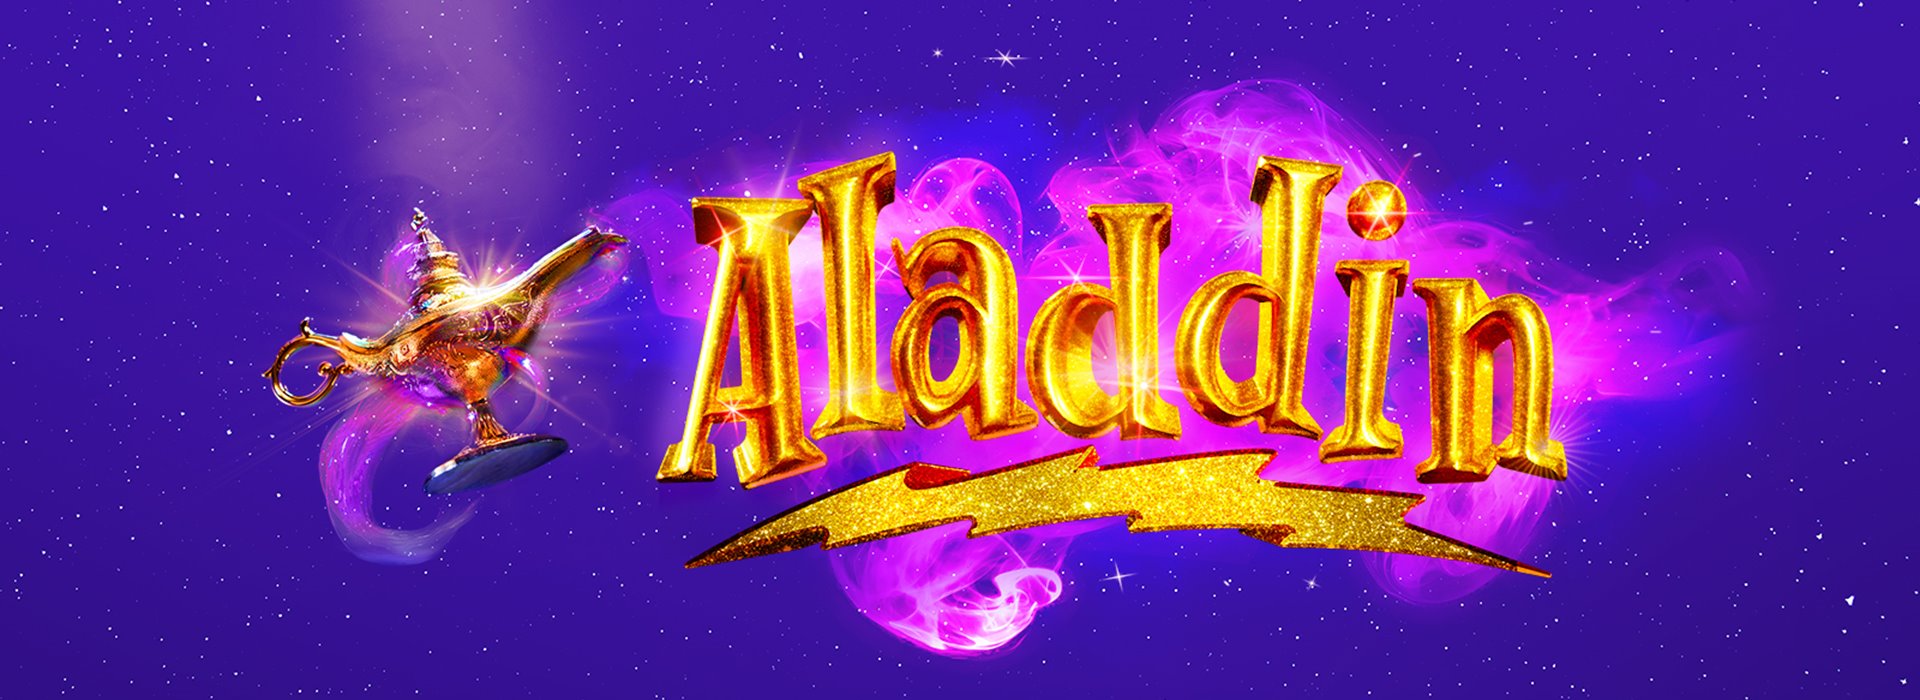 An Aladdins lamp and the word Aladdin